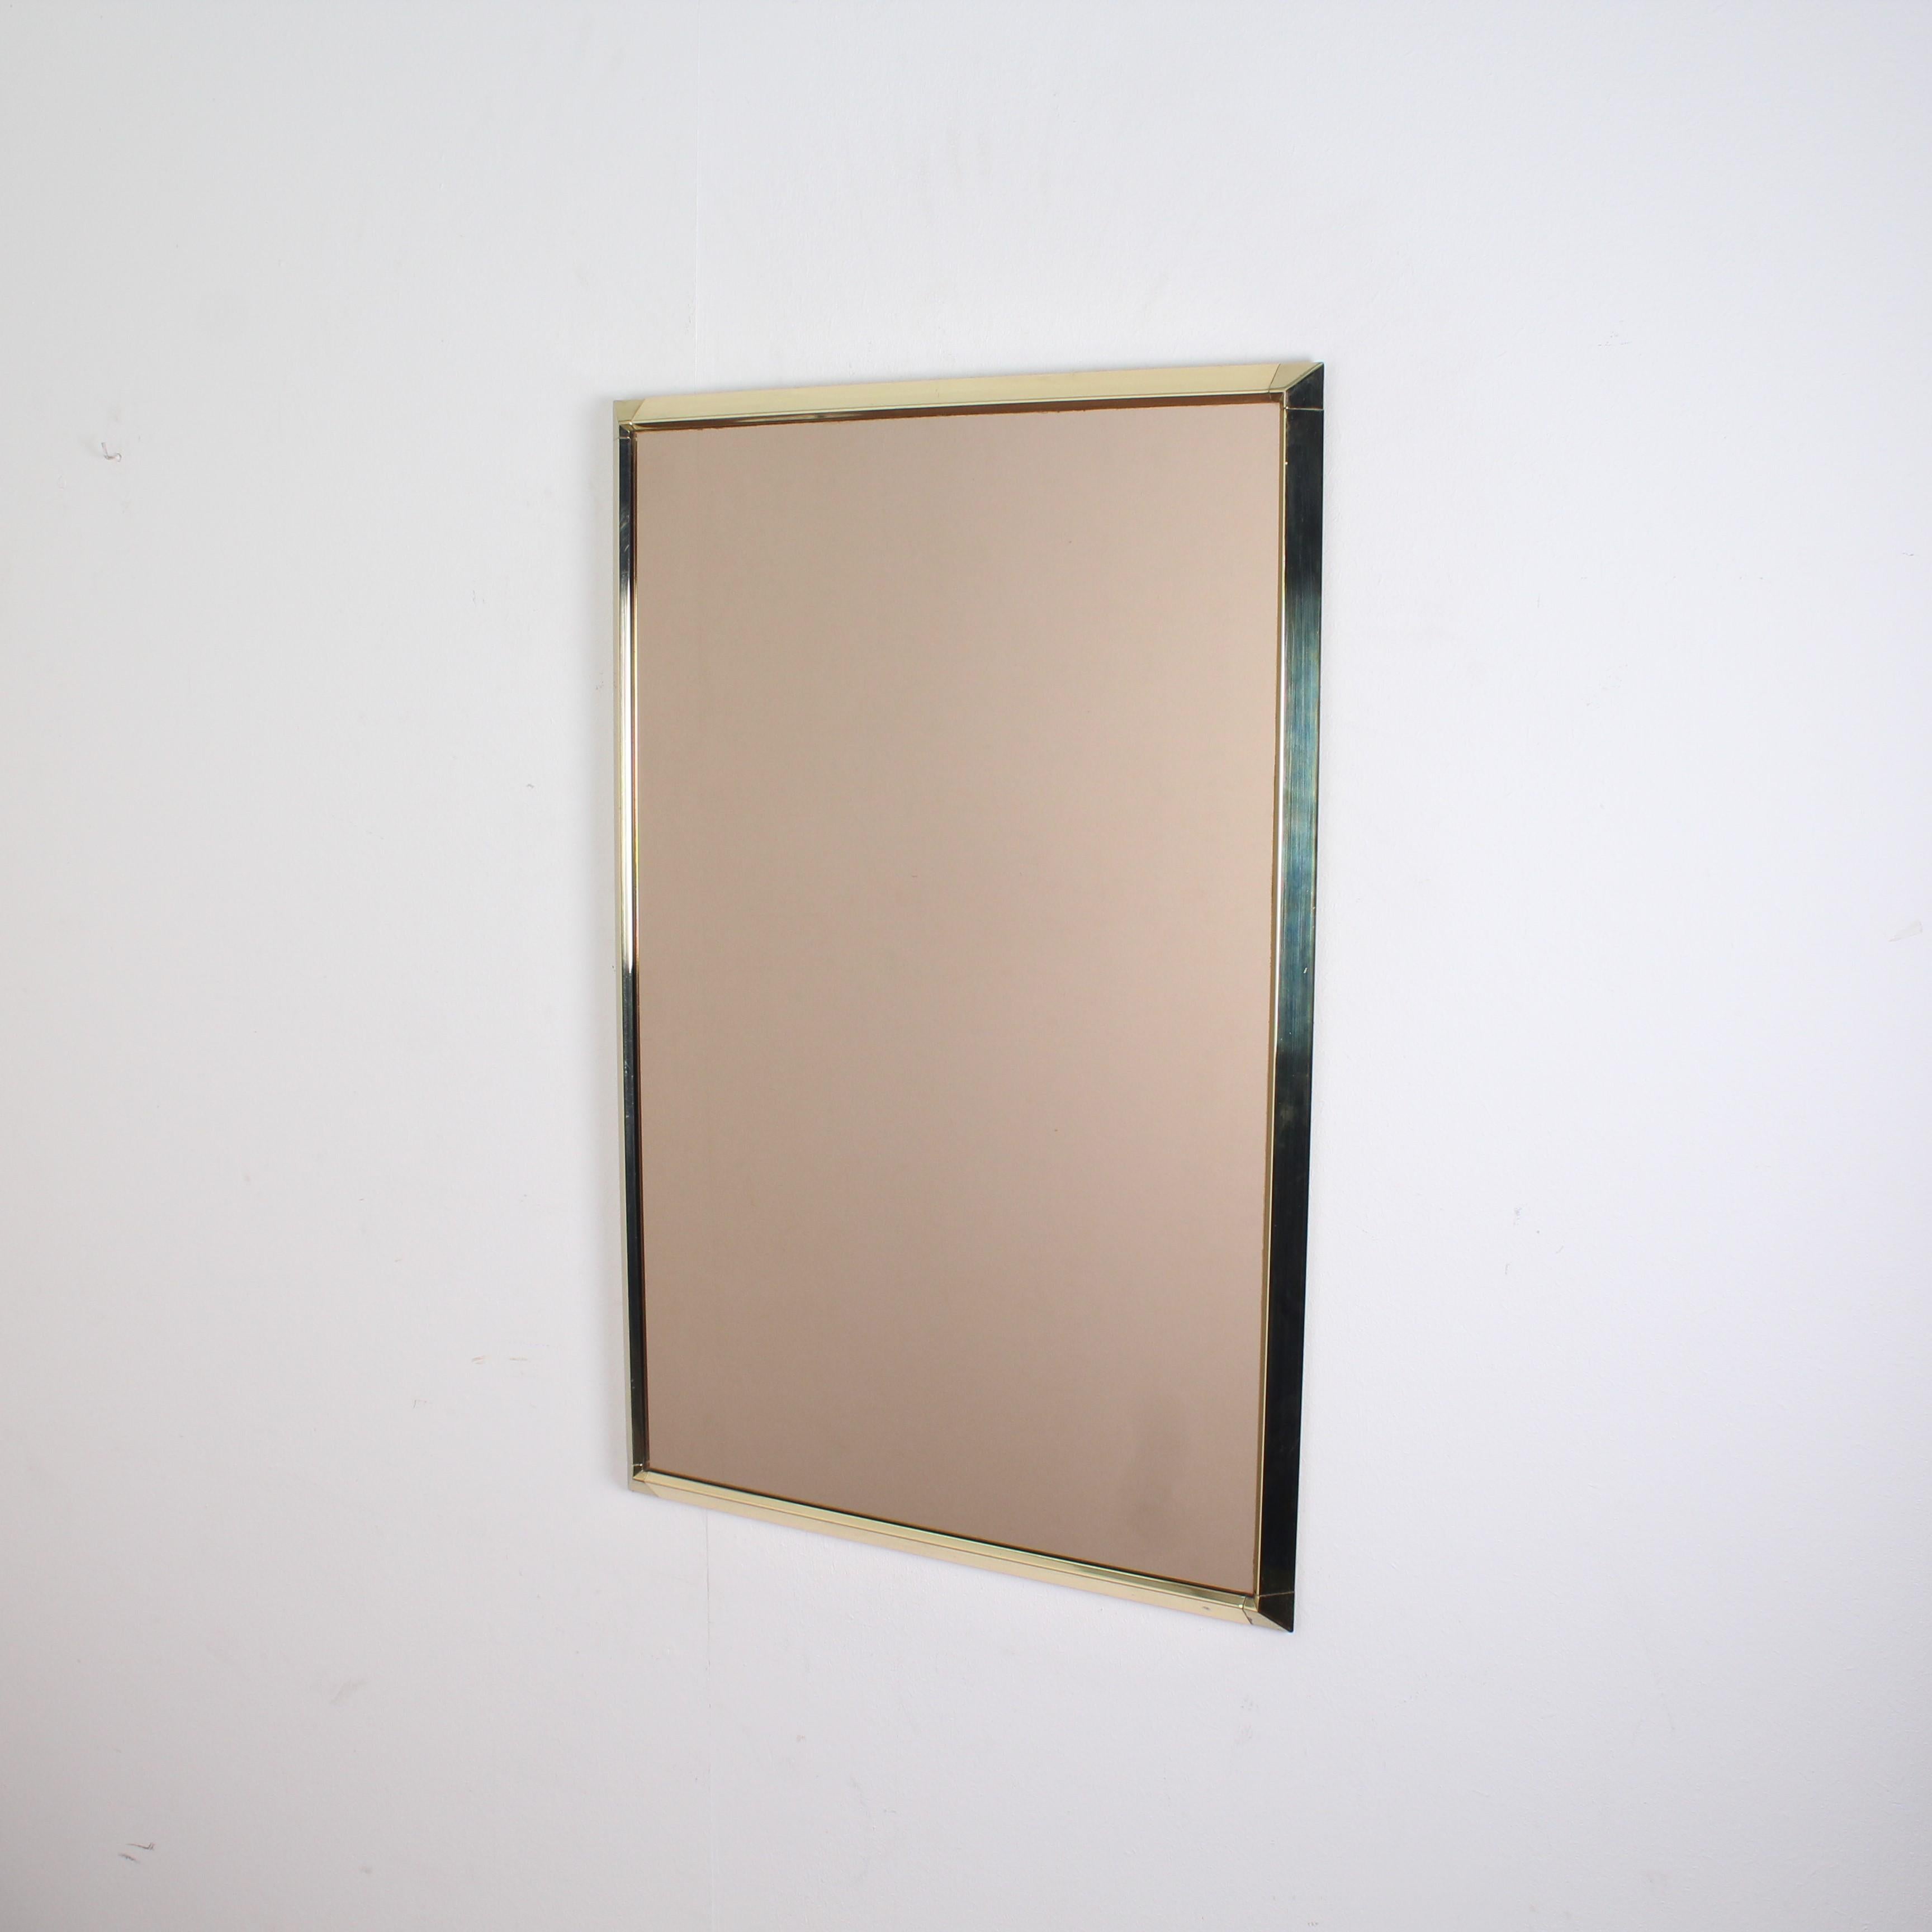 Minimalist midcentury brass Italian mirror, 1970s 
Wear with age and use.